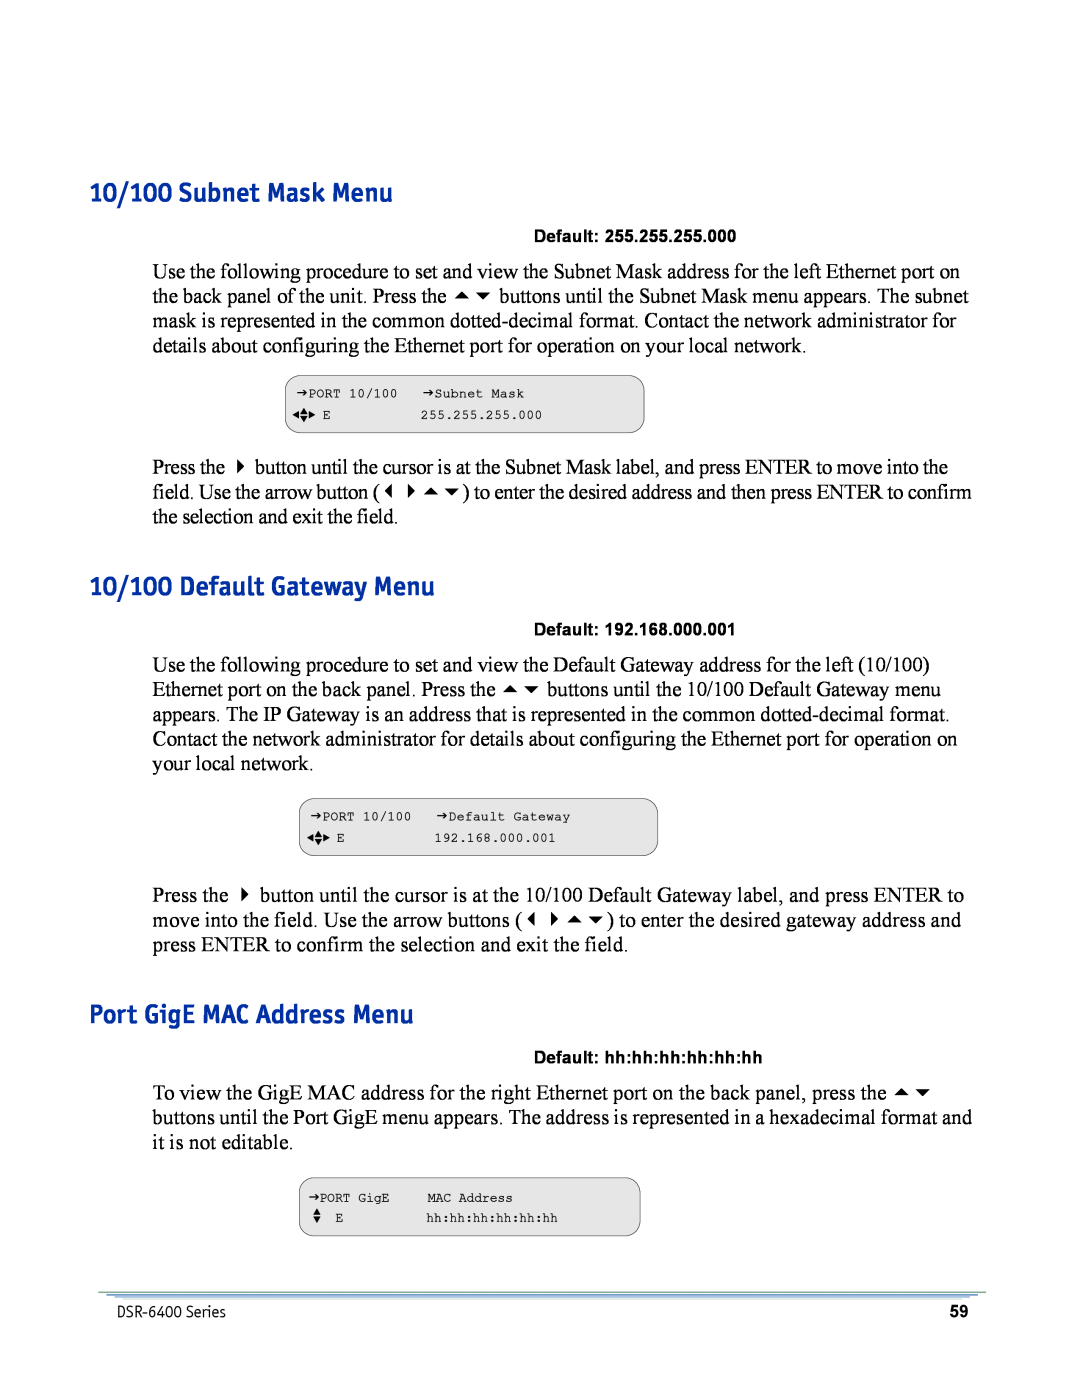 Motorola DSR-6400 manual 10/100 Subnet Mask Menu, 10/100 Default Gateway Menu, Port GigE MAC Address Menu 